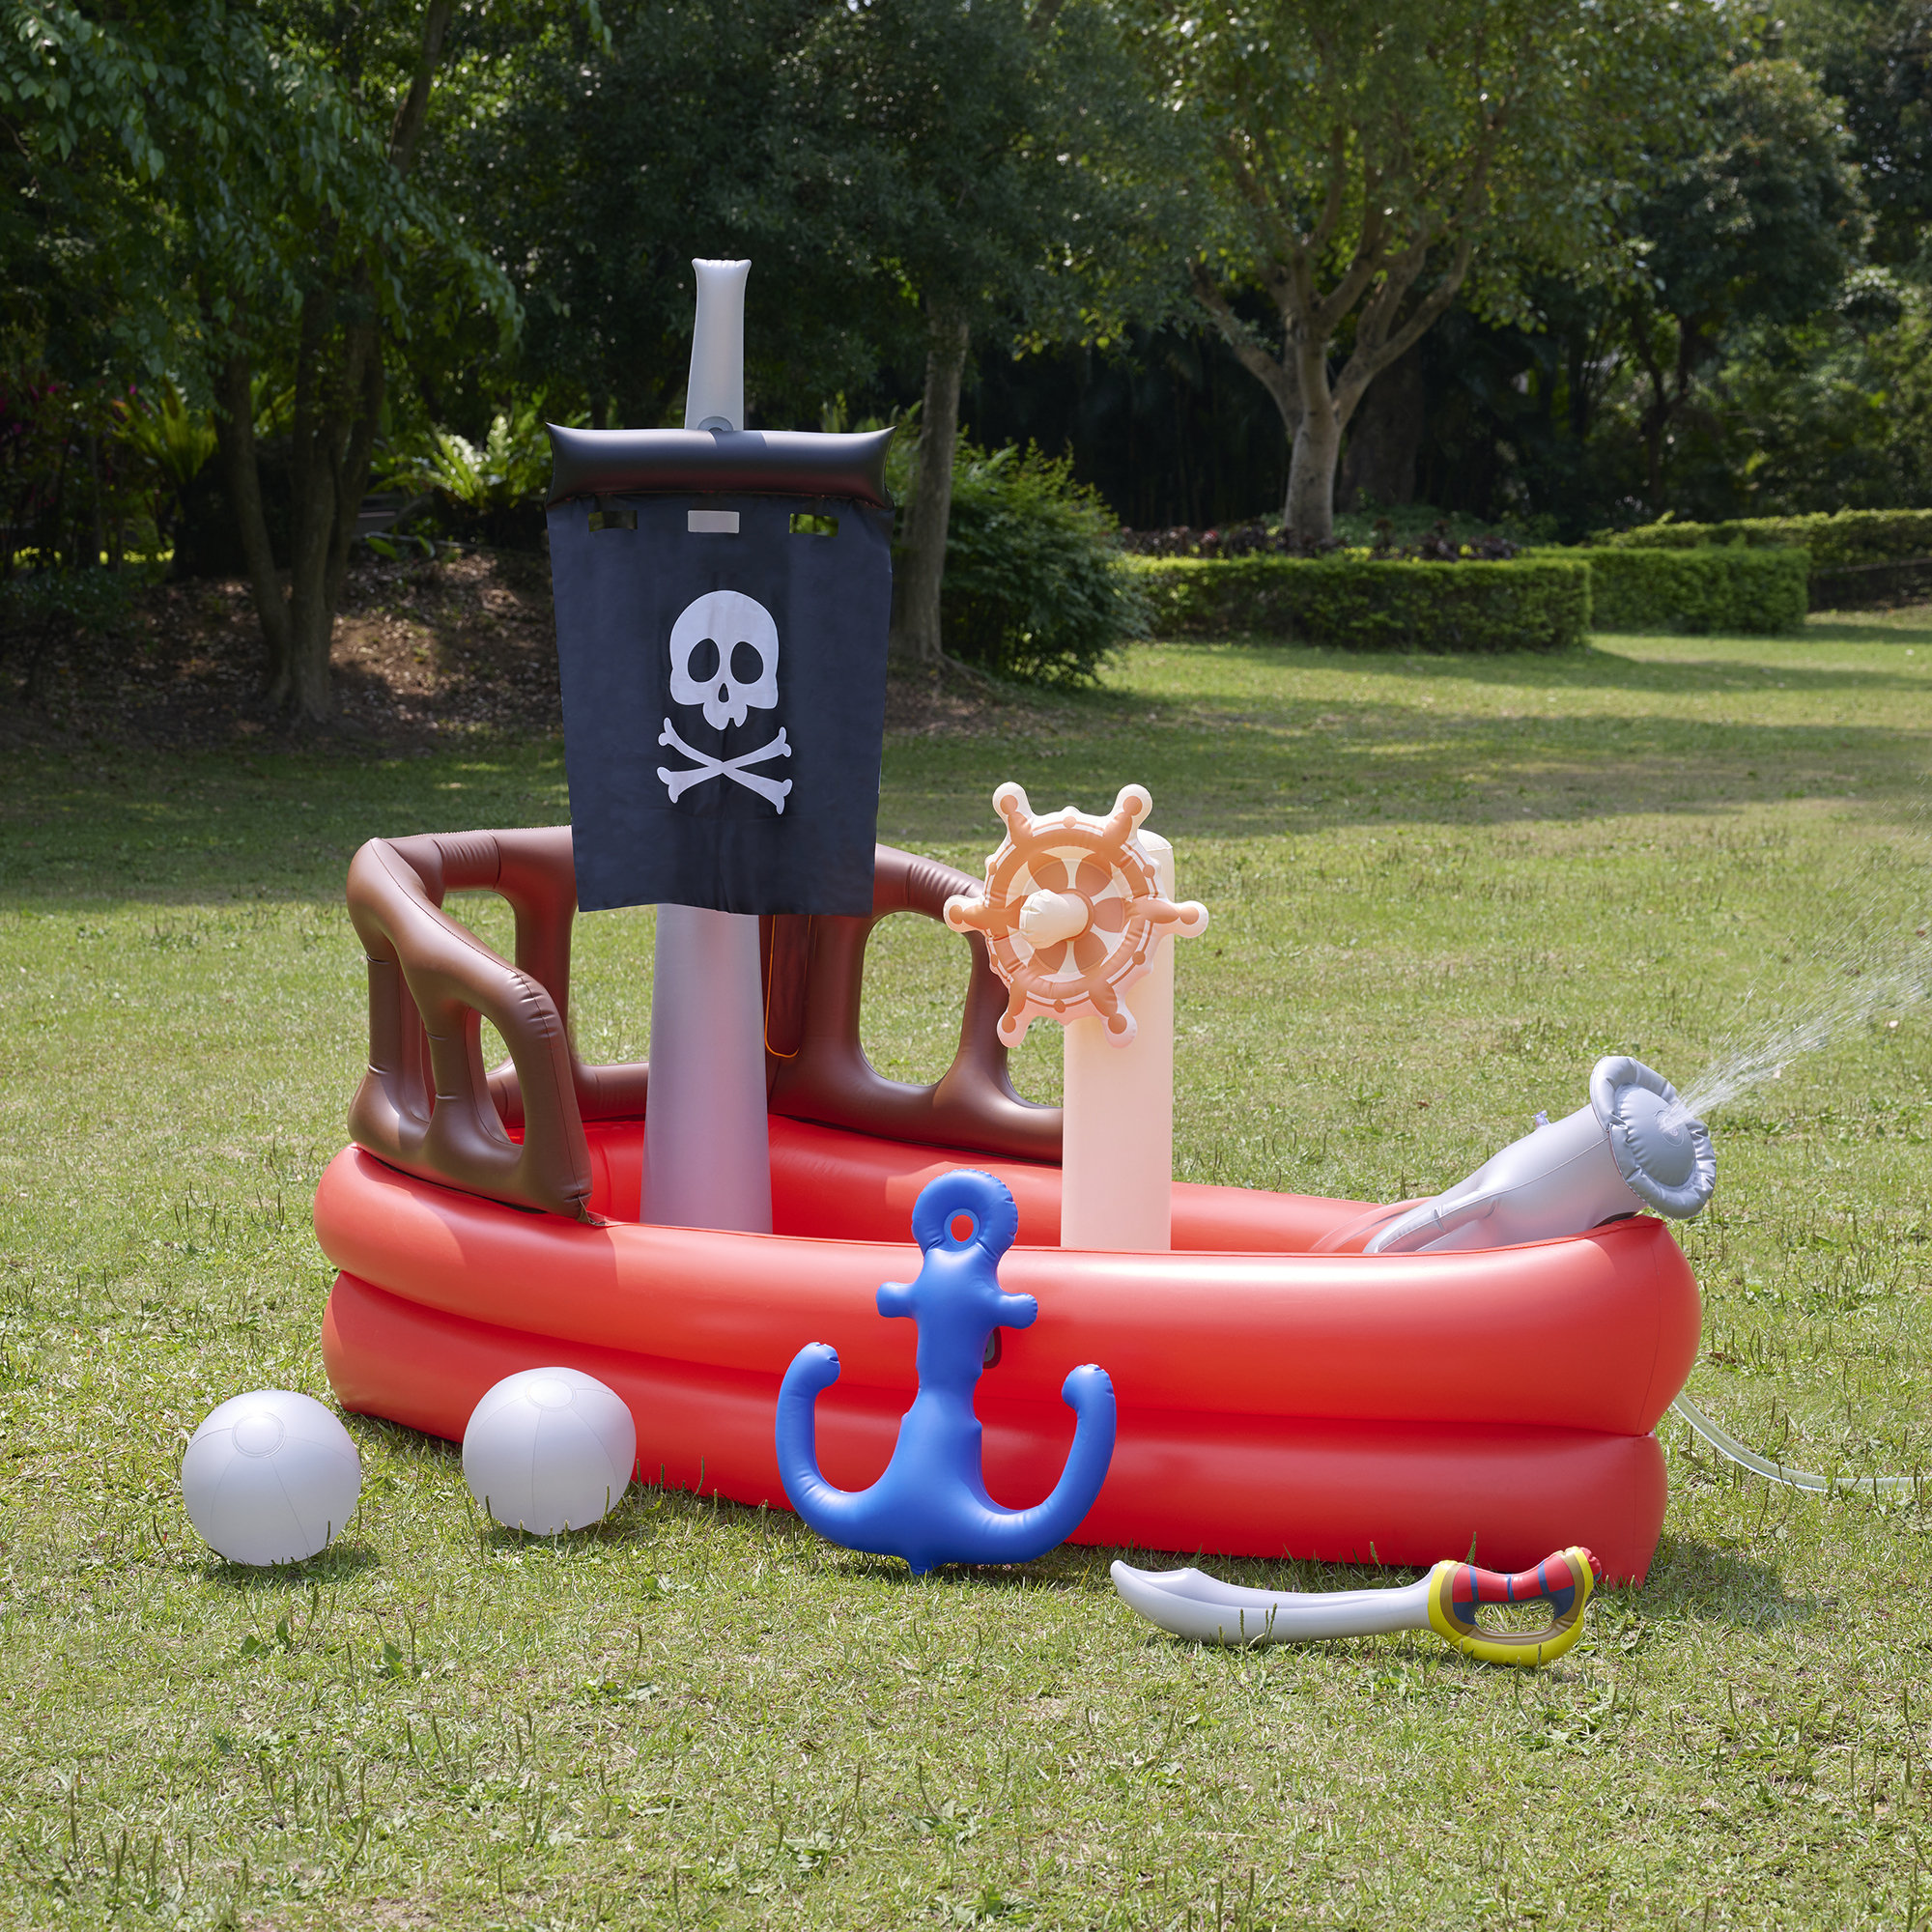 Teamson Kids Water Fun Pirate Boat Inflatable Kiddie Pool With